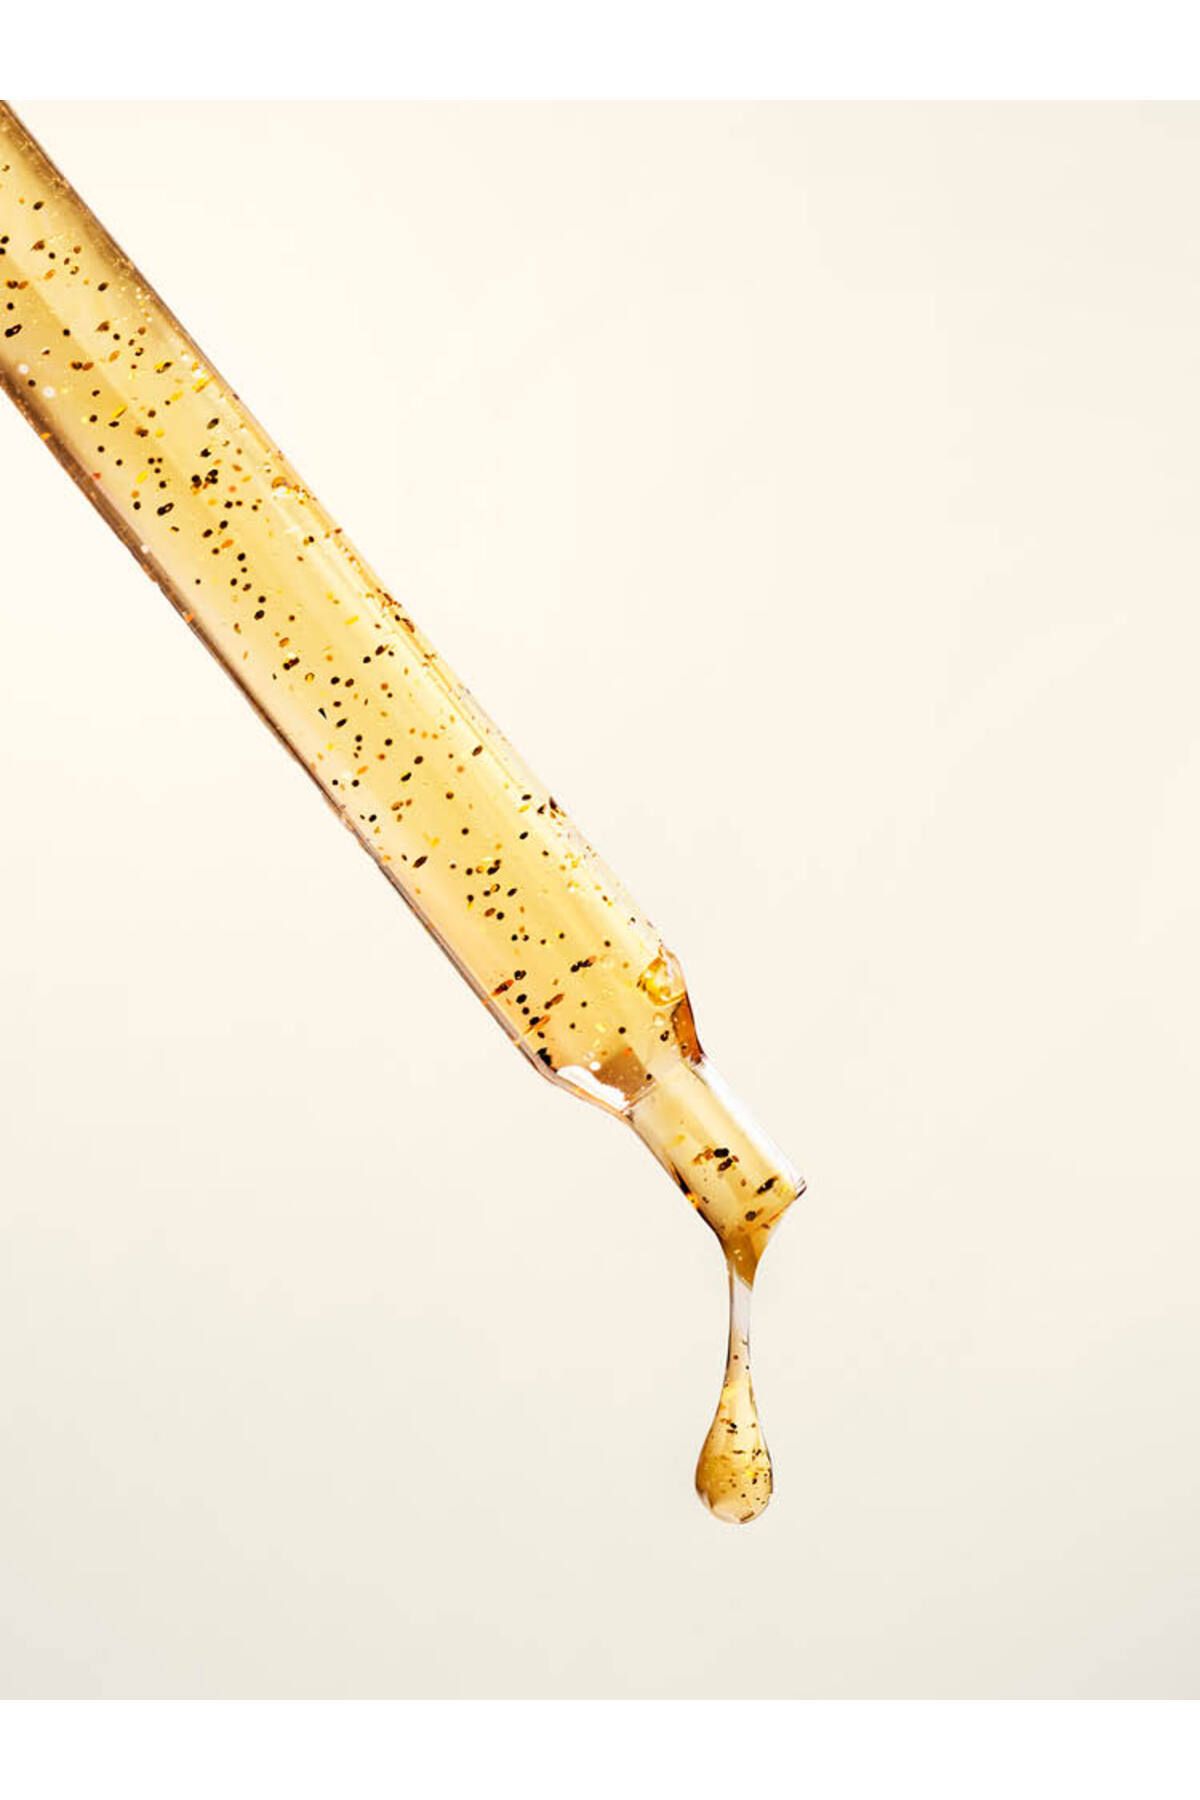 Darphin روغن مراقبتی طلایی با 8 گل معطر روشن‌کننده و لطیف کننده پوست